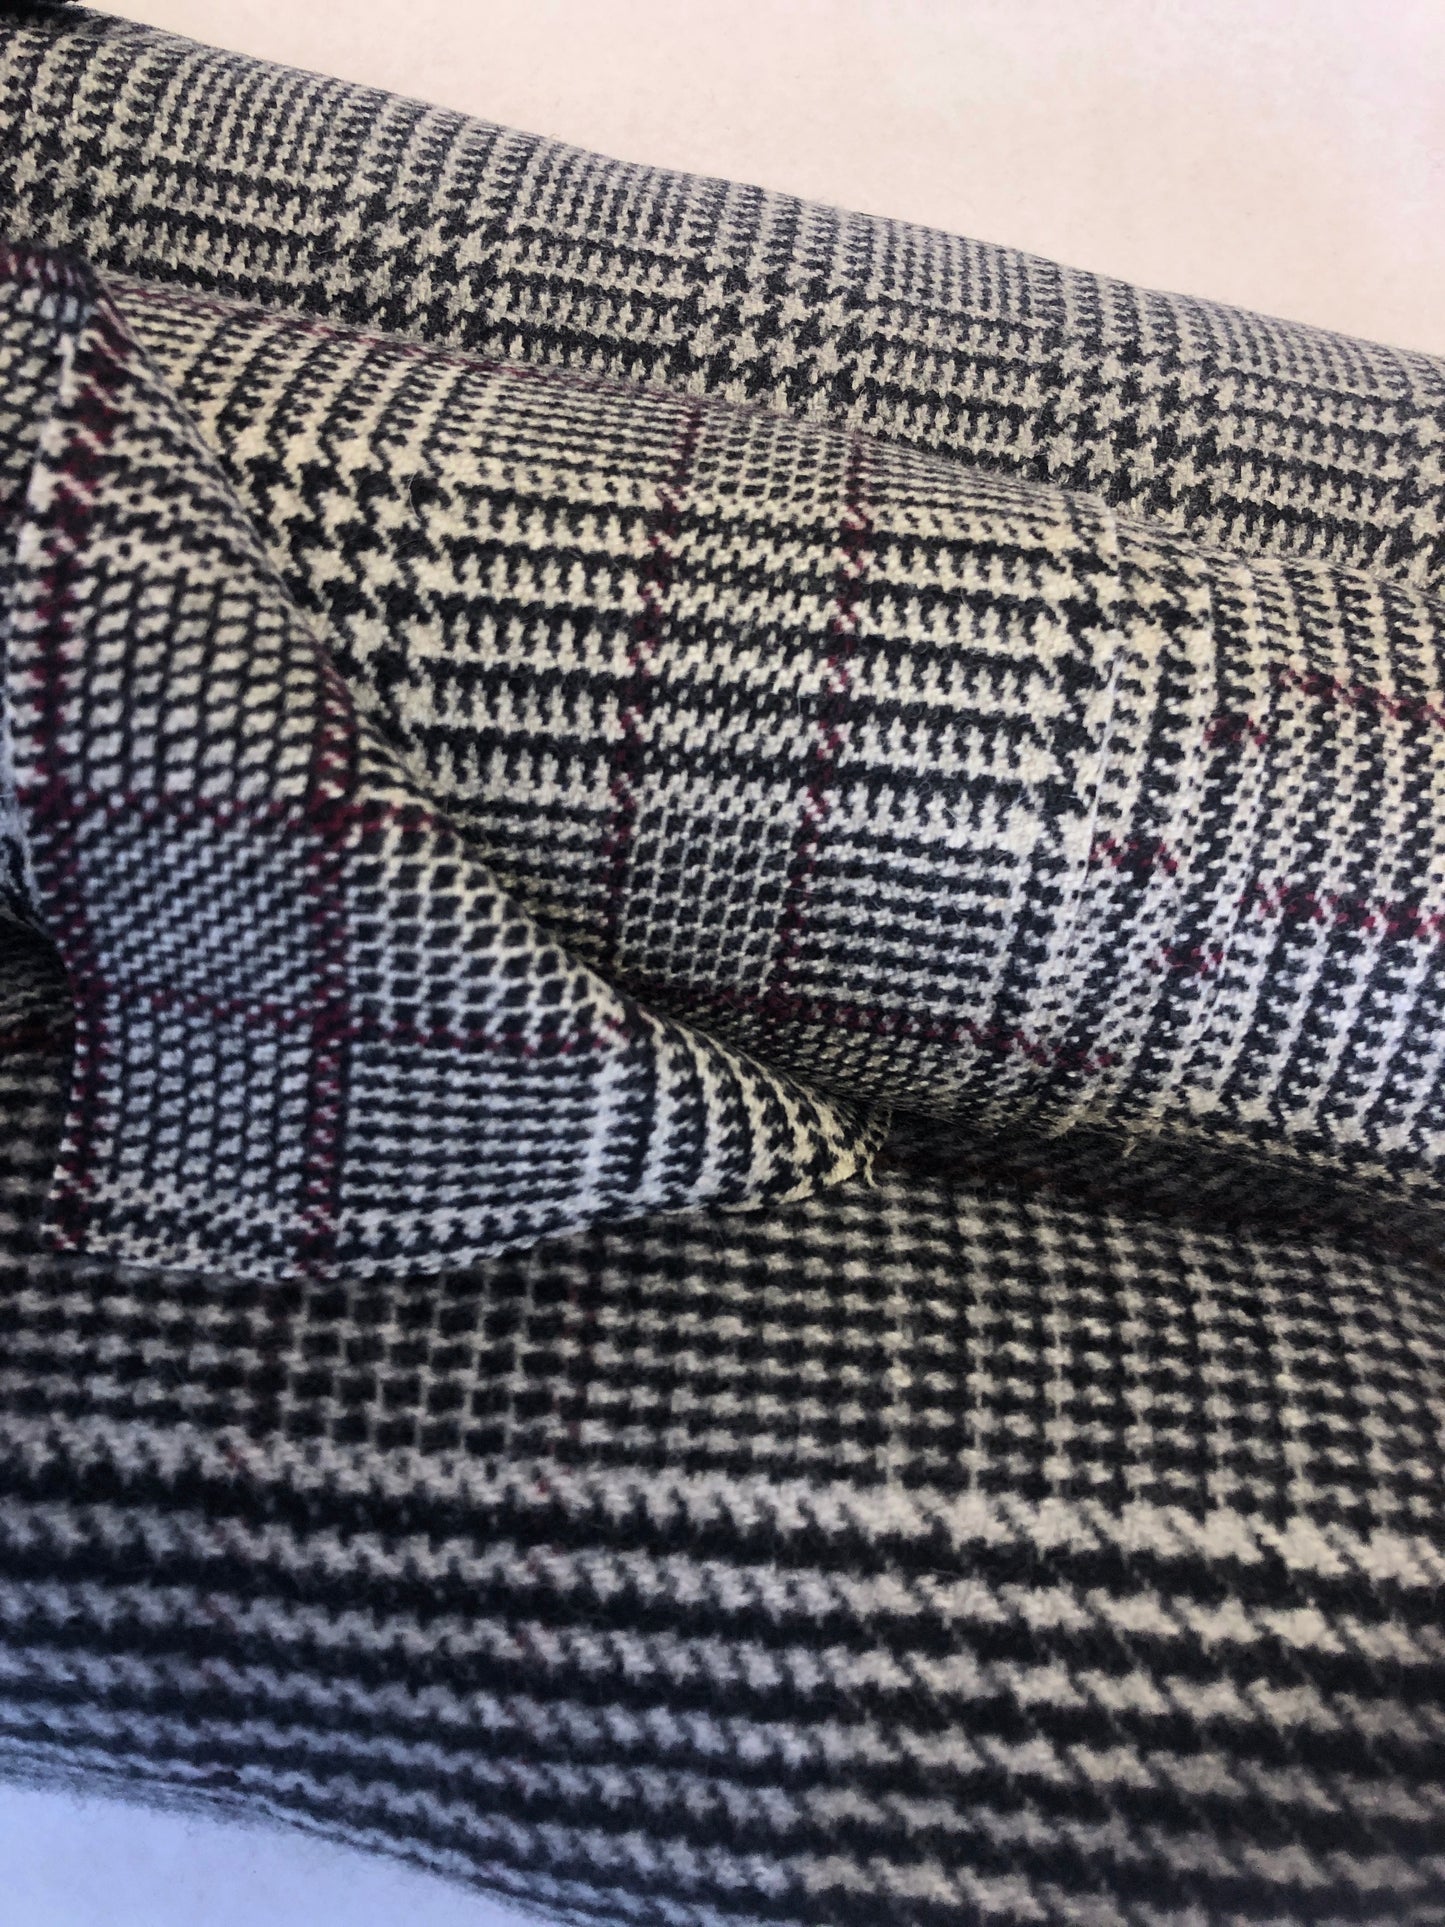 Fabric, Checkered in Beige/Black, 100% Virgin Wool